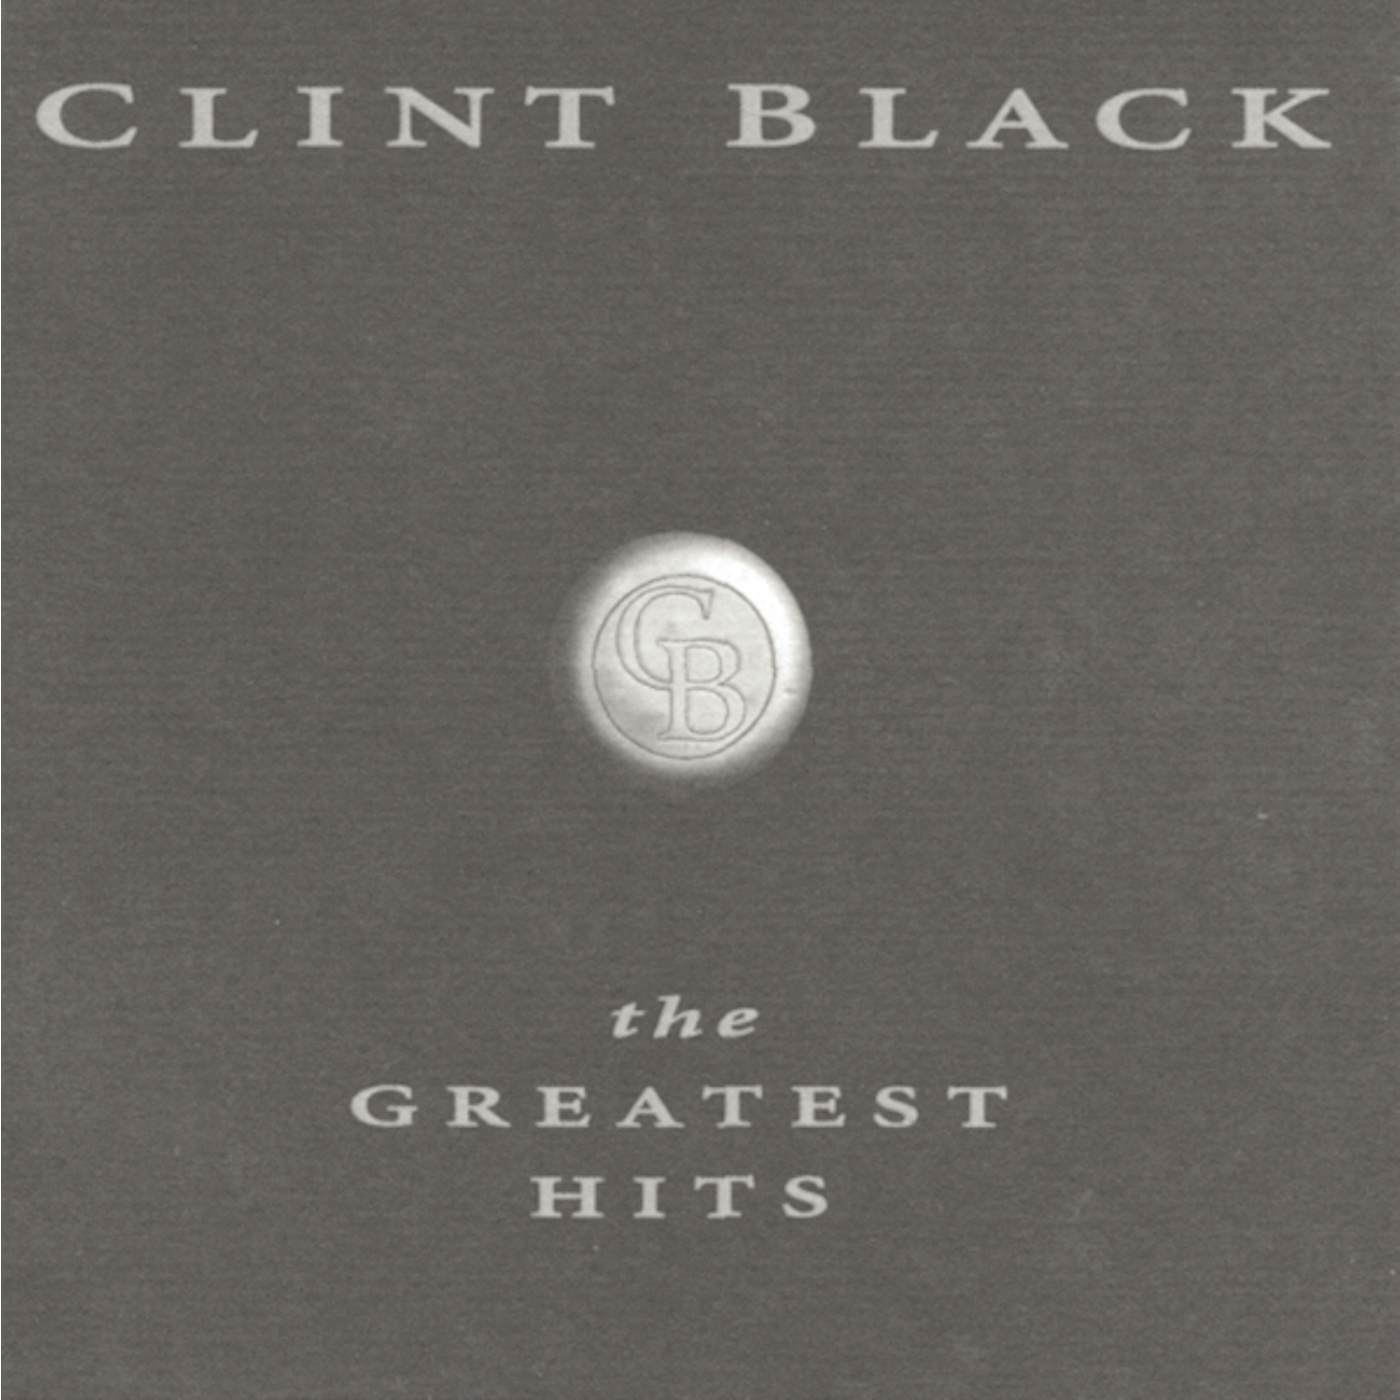 Clint Black GREATEST HITS CD